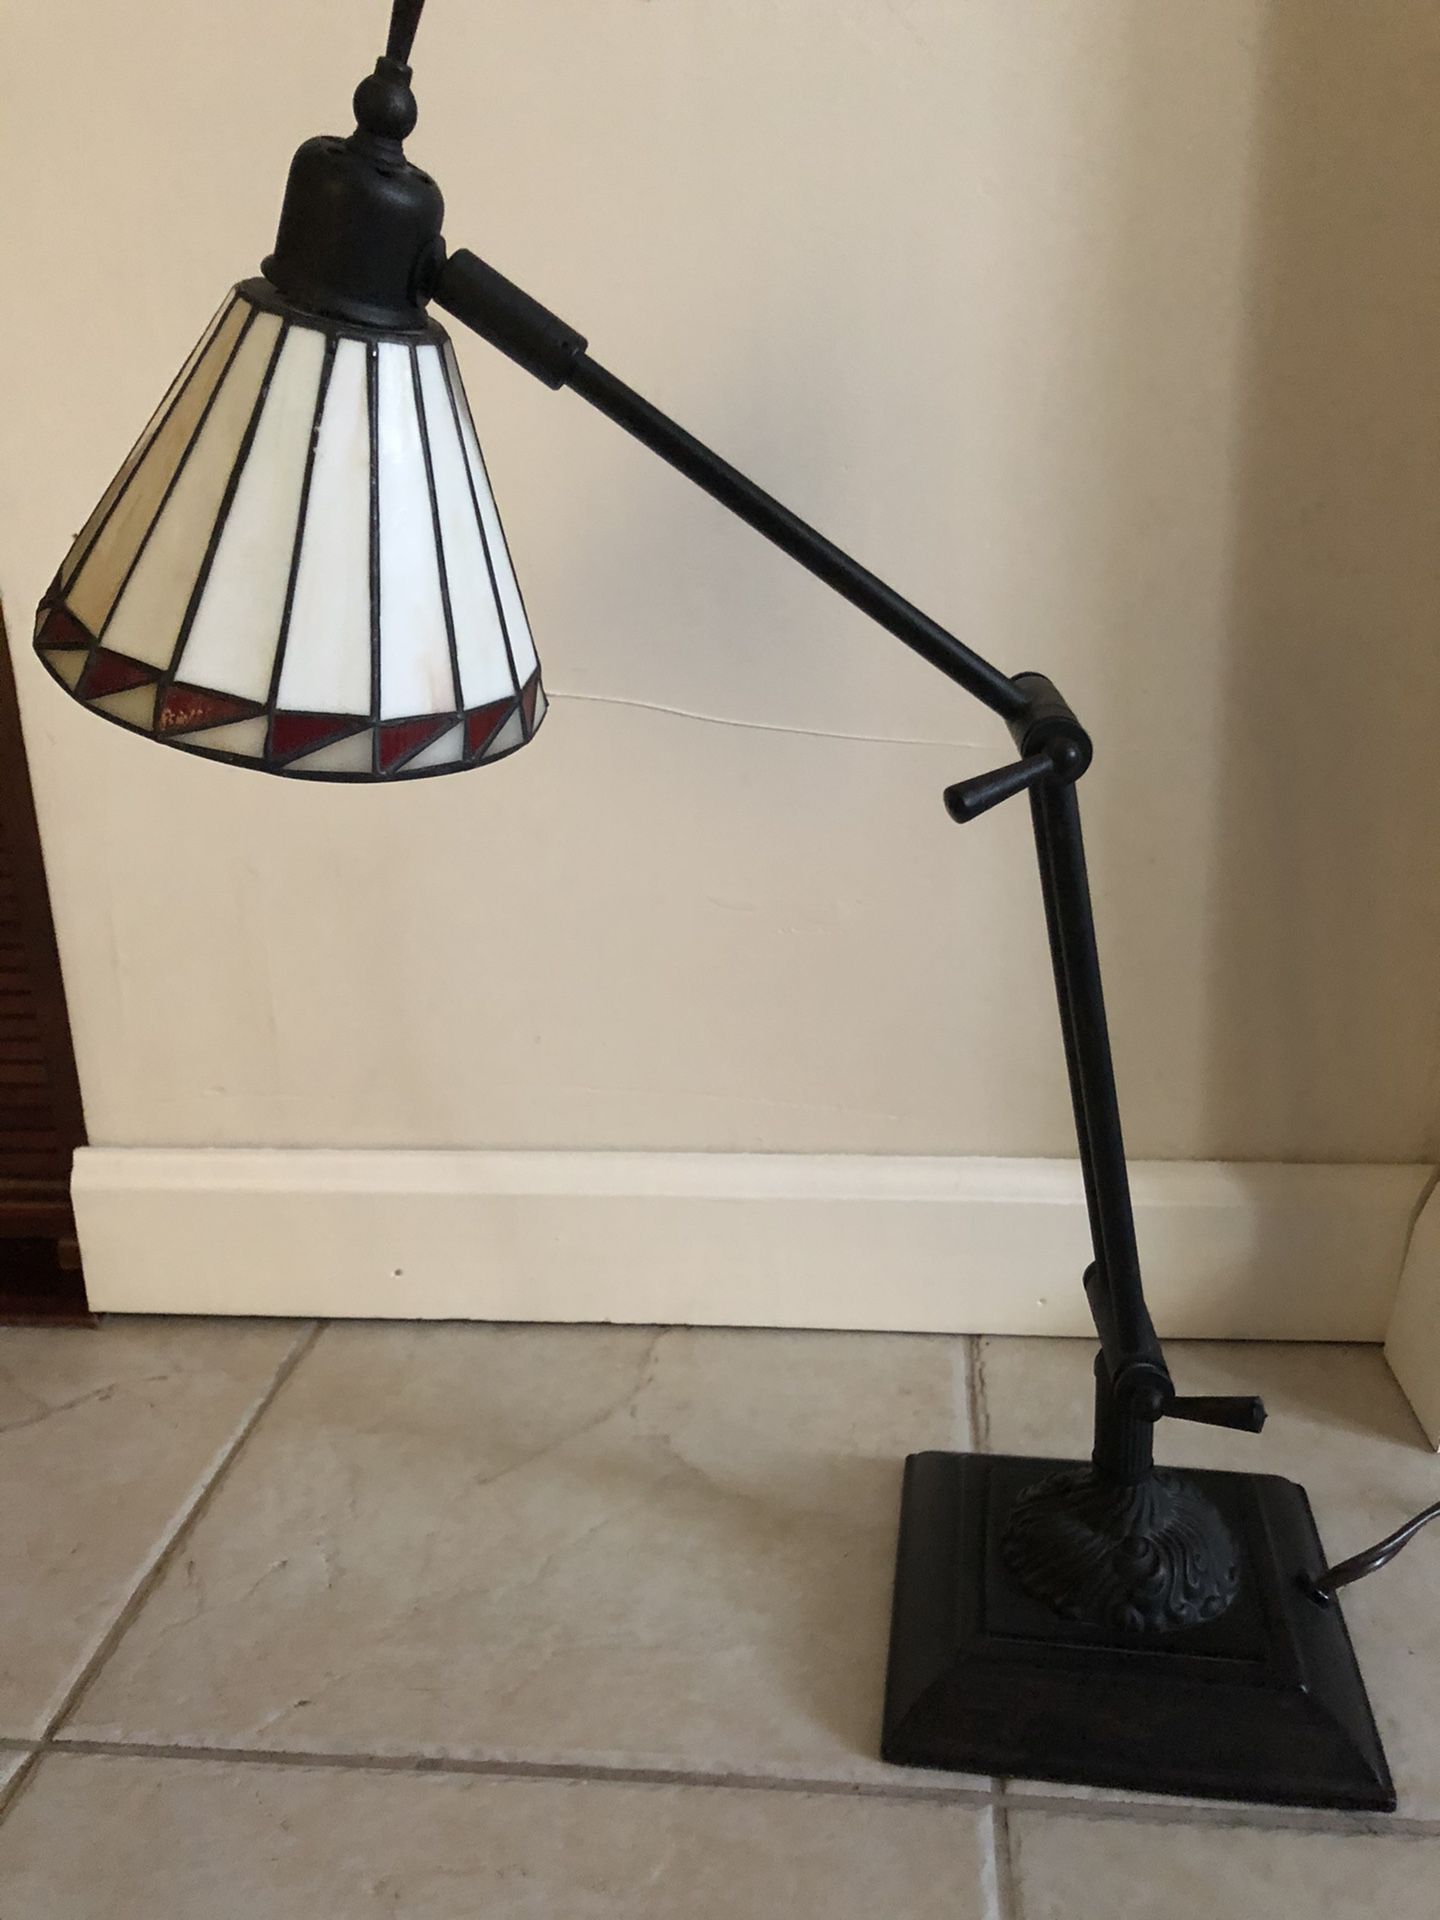 Tiffany desk lamp with petite shade